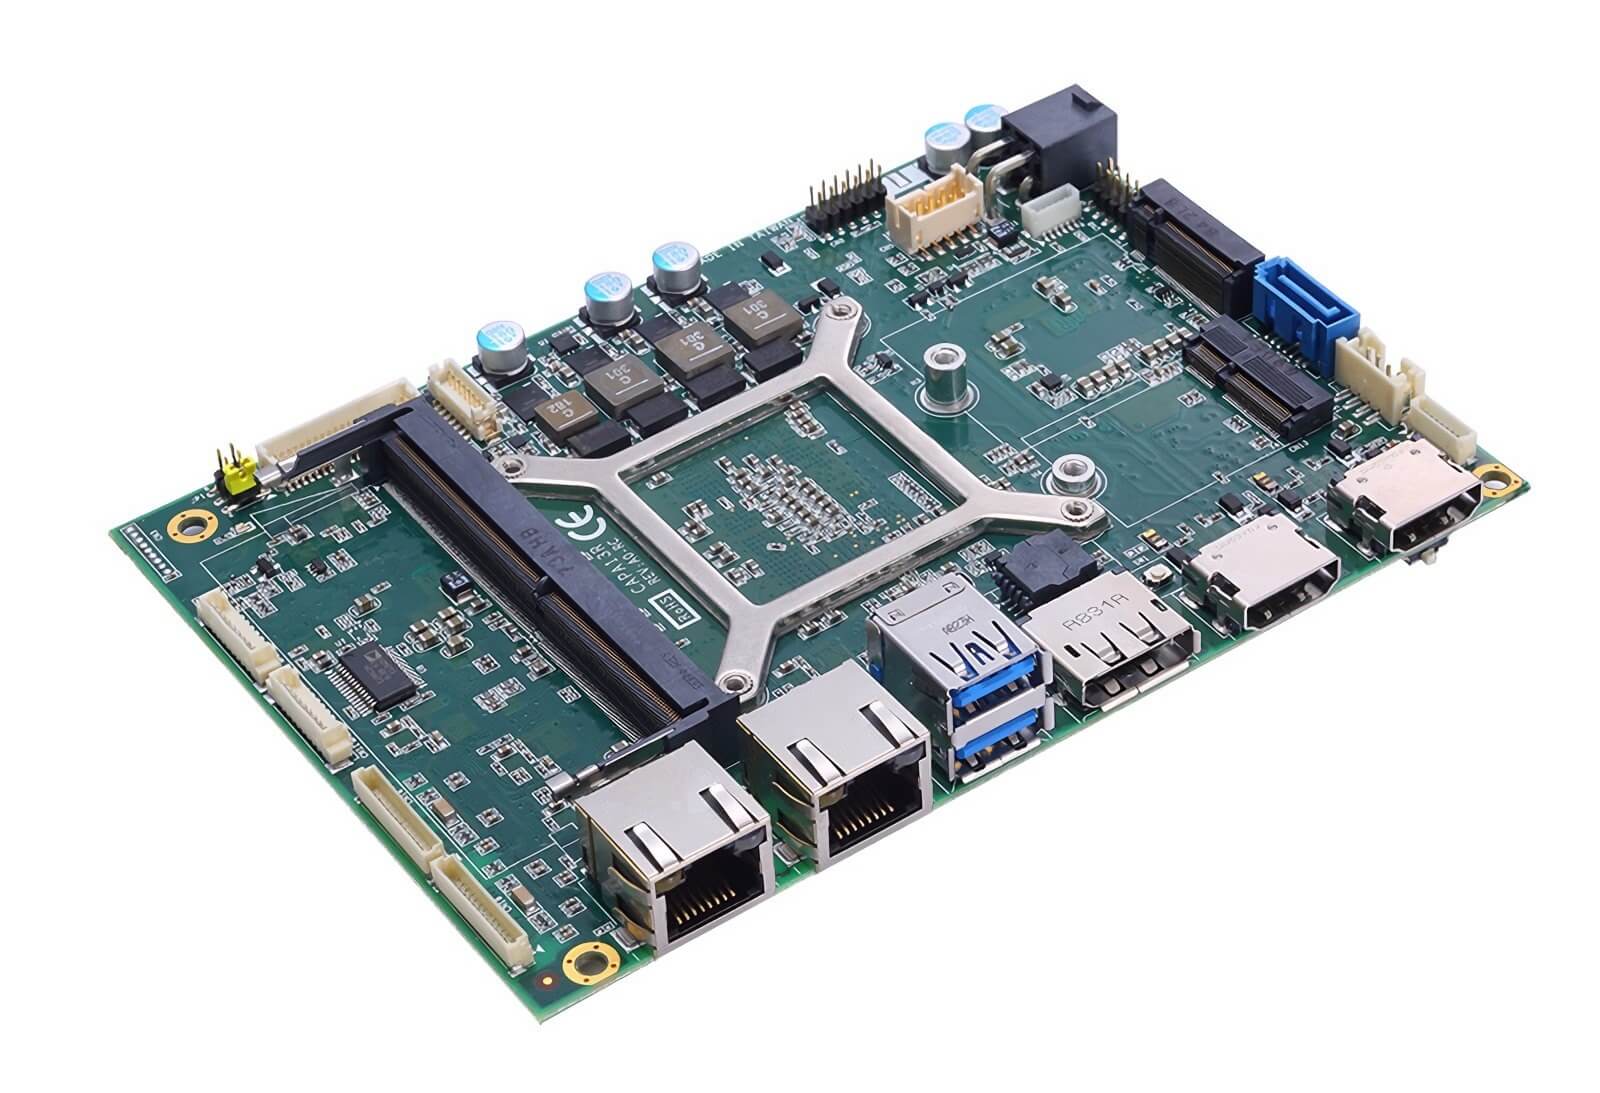 This Raspberry Pi-like SBC packs a Ryzen APU with Vega 11